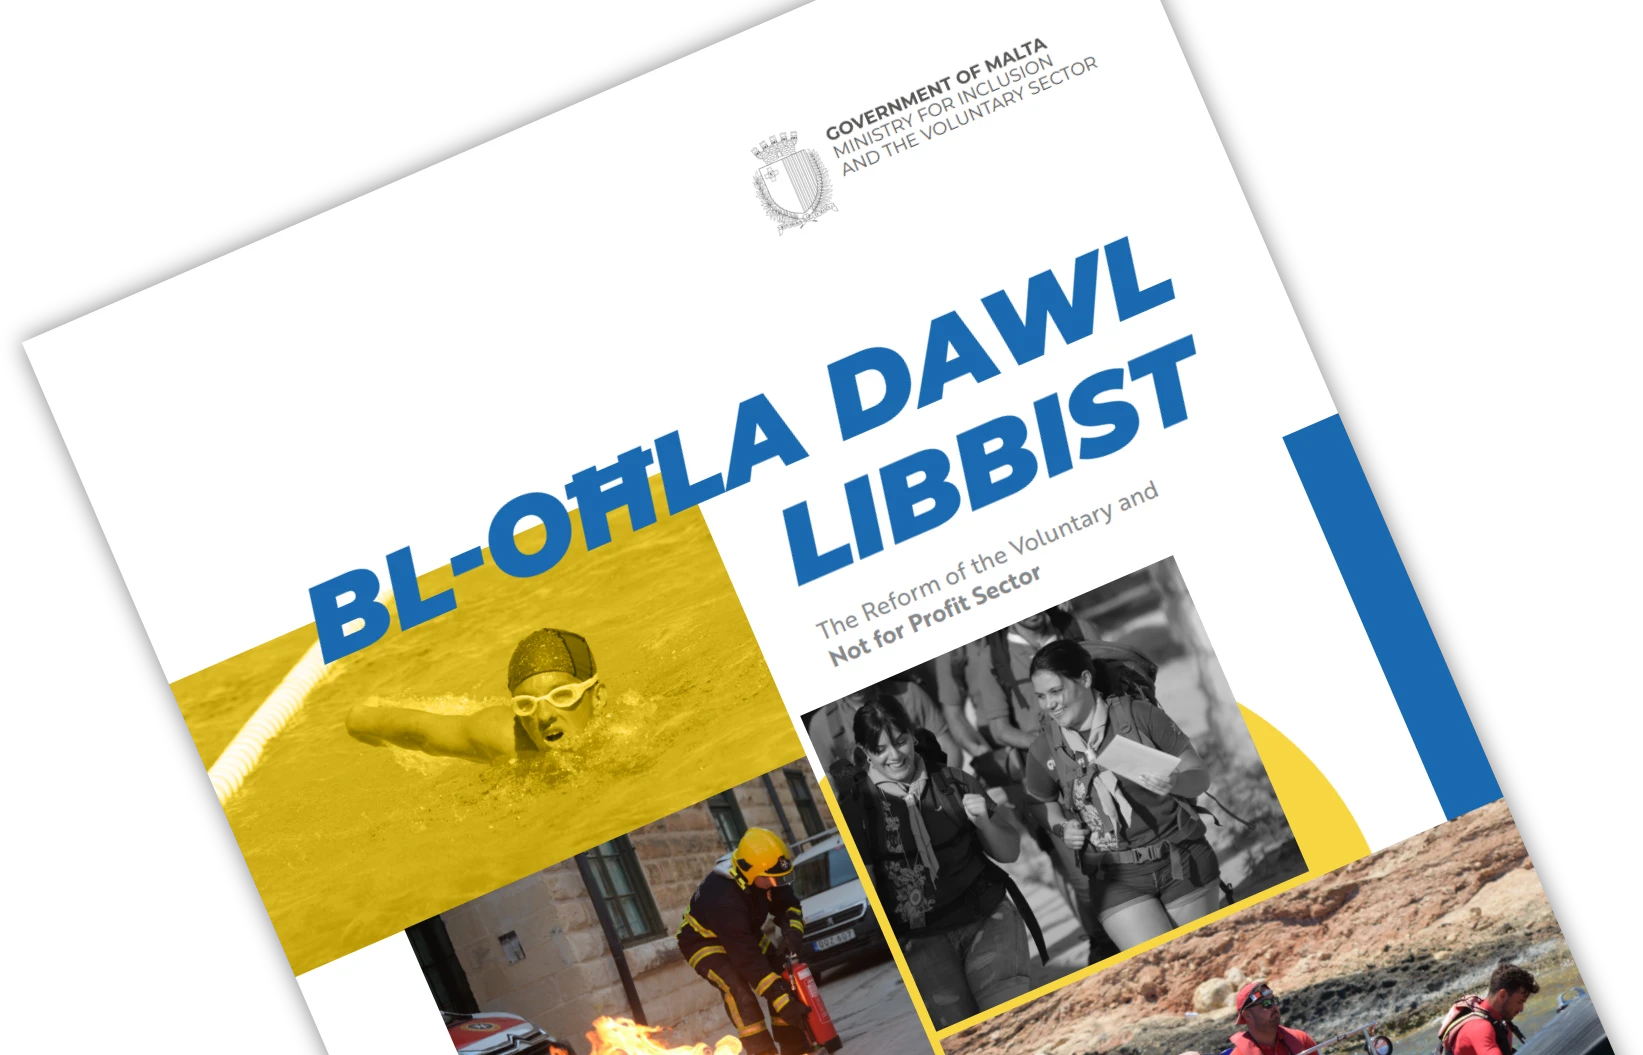 Response to Public Consultation "Bl-oħla dawl libbist"